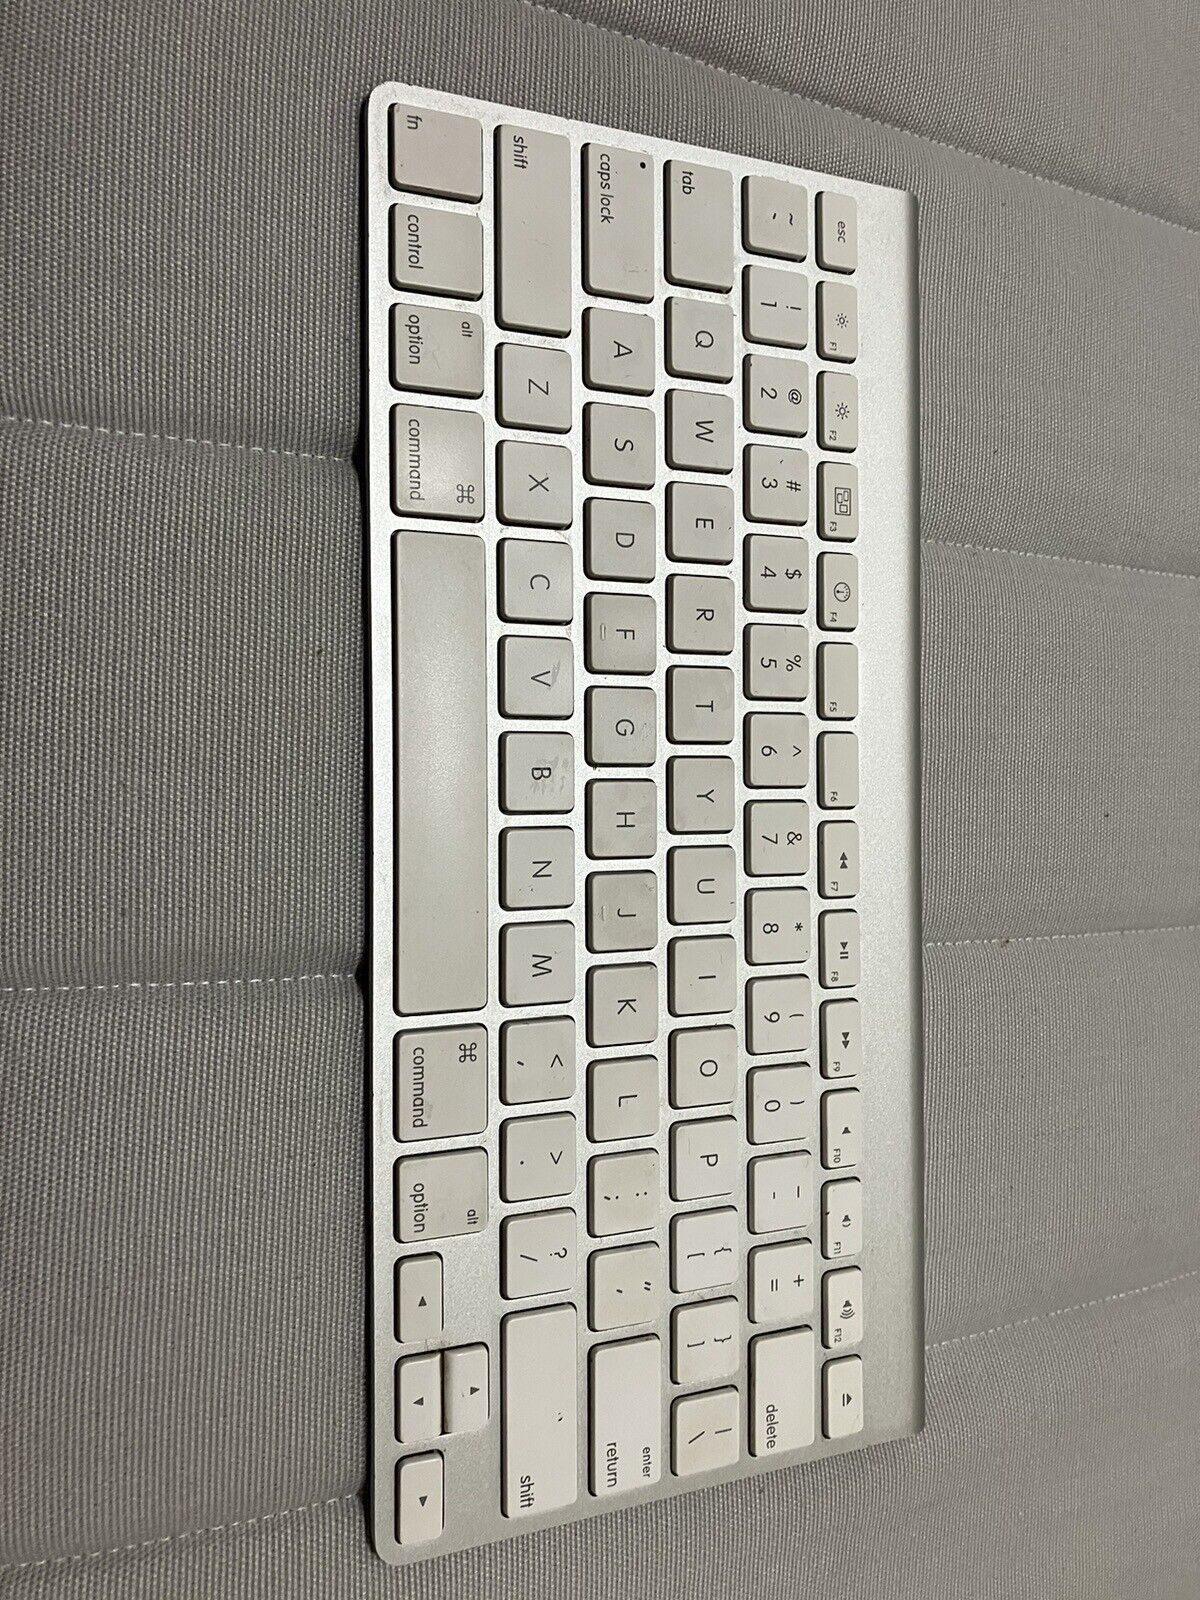 Apple MC184LL/A Wireless Keyboard